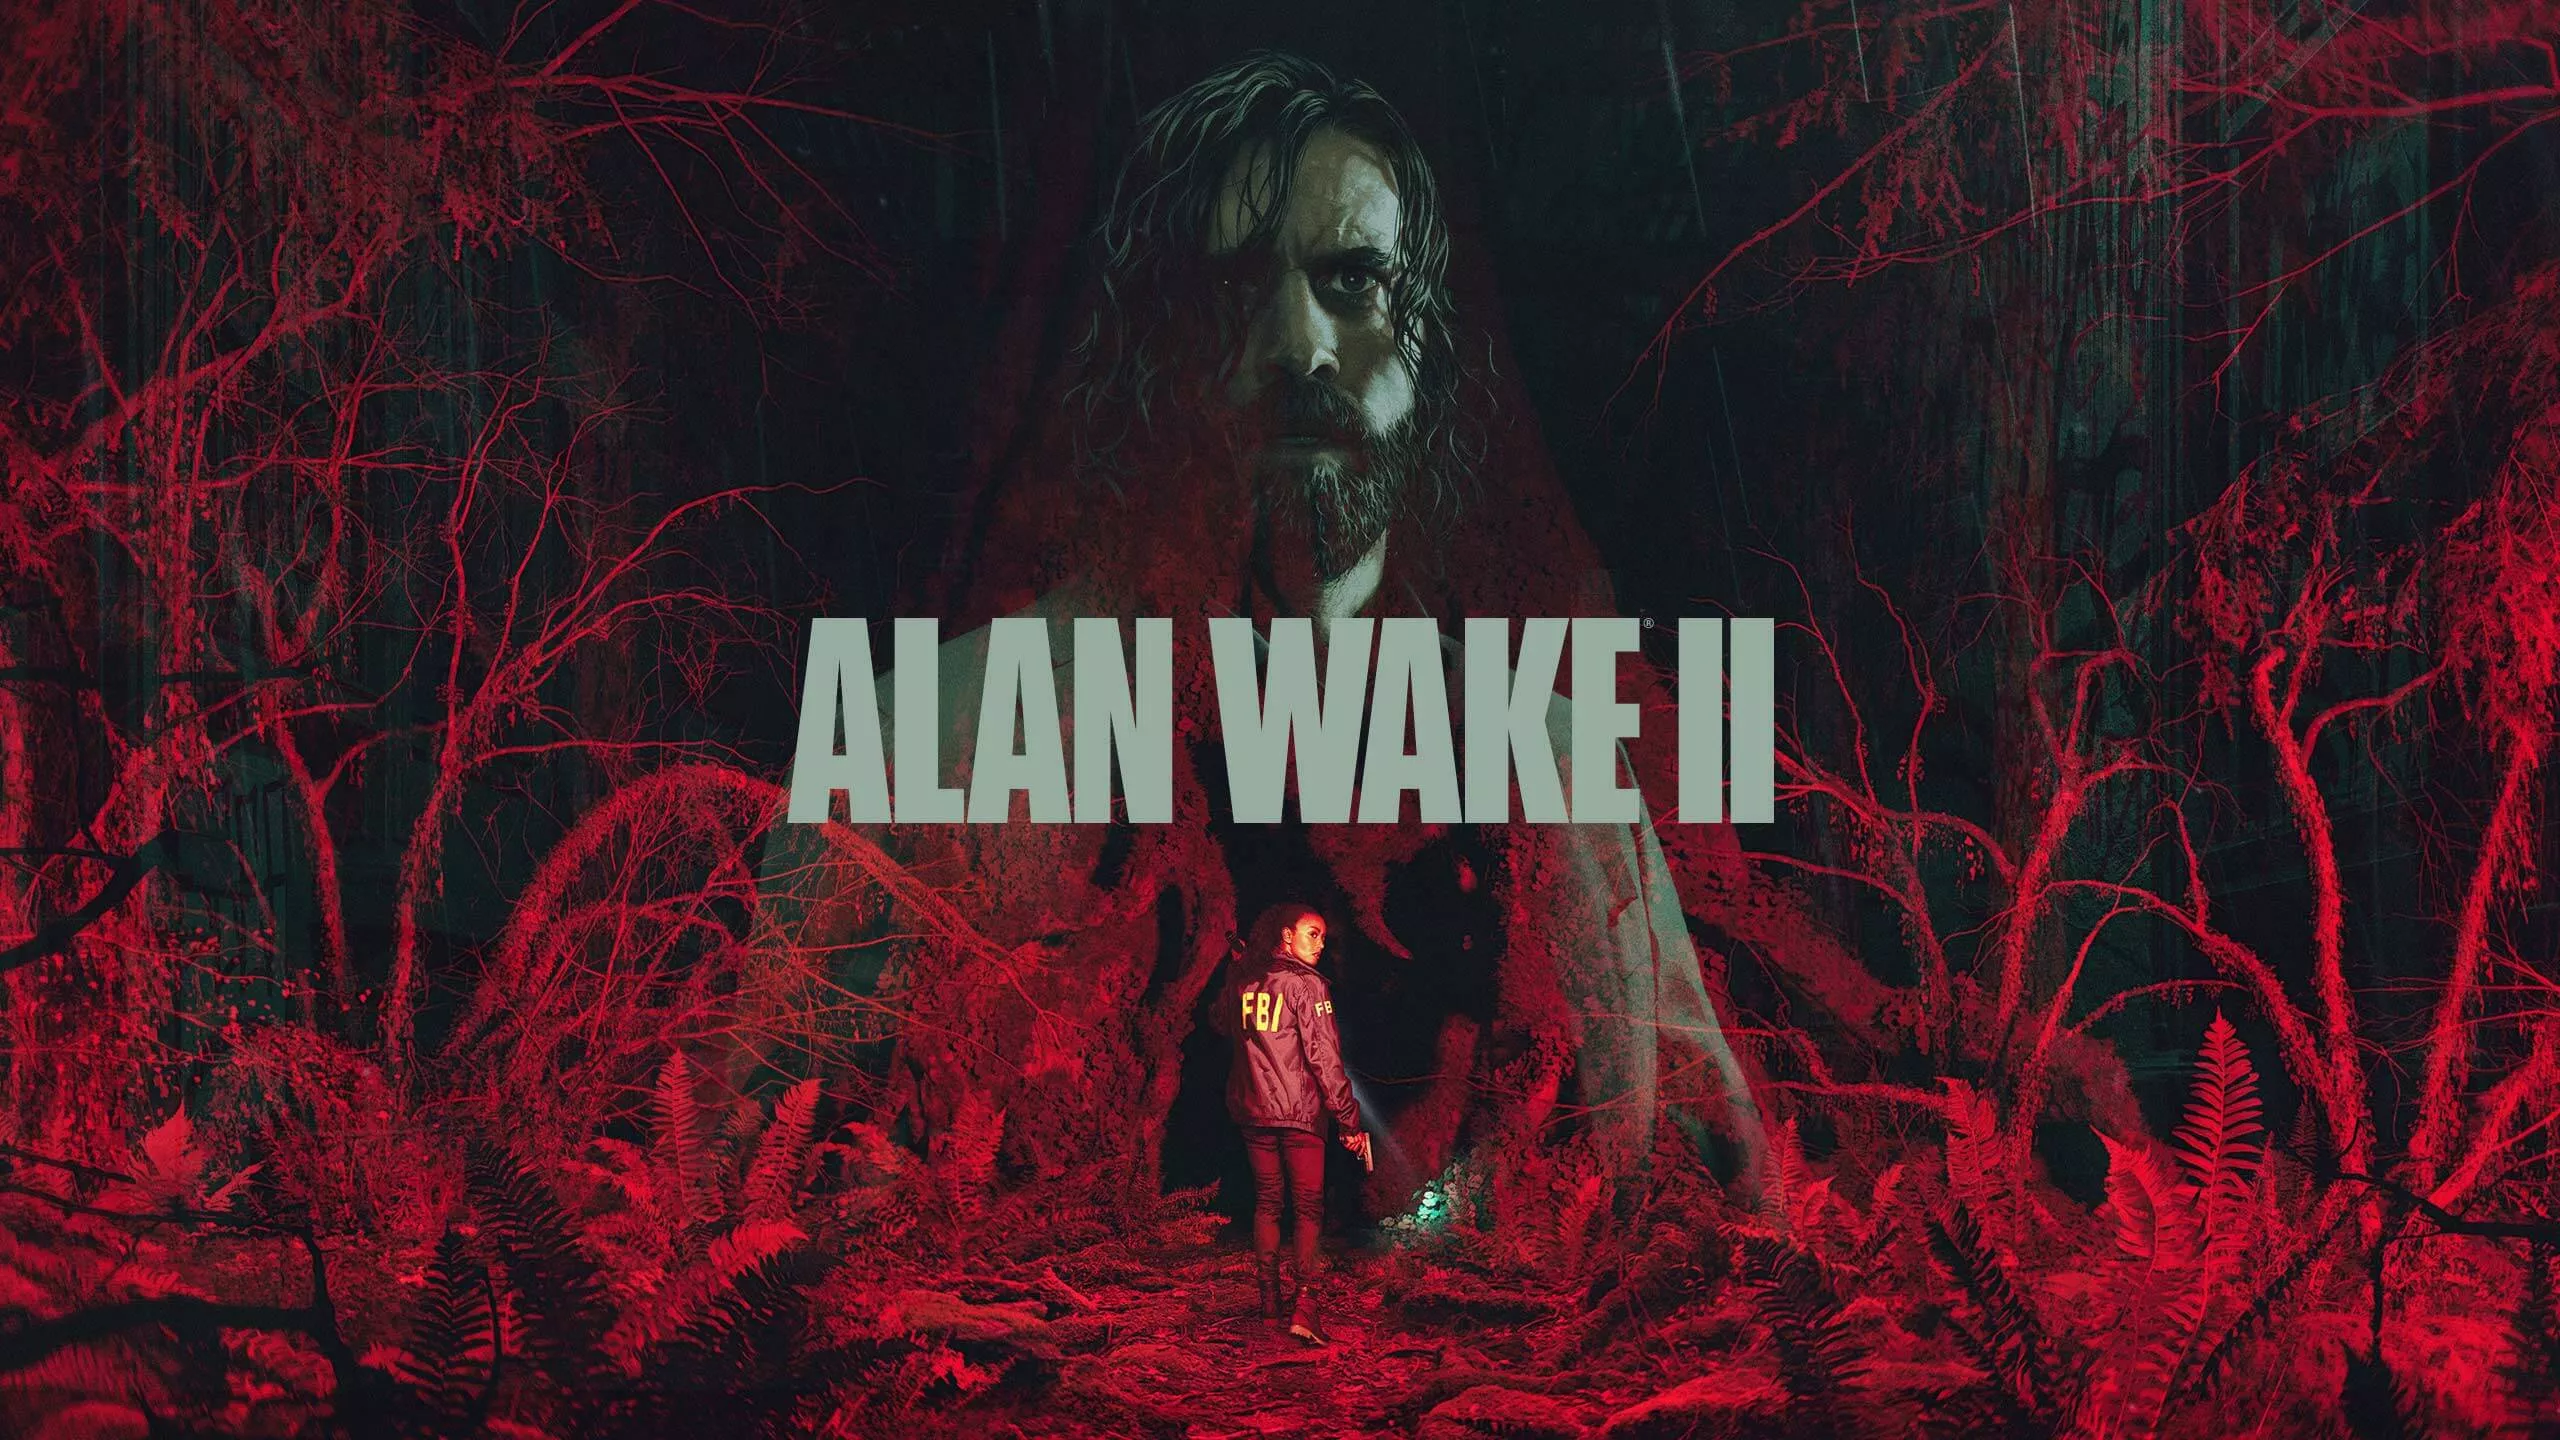 Alan Wake 2: Remedy Entertainment machen Anspielung auf New Game+ Heropic